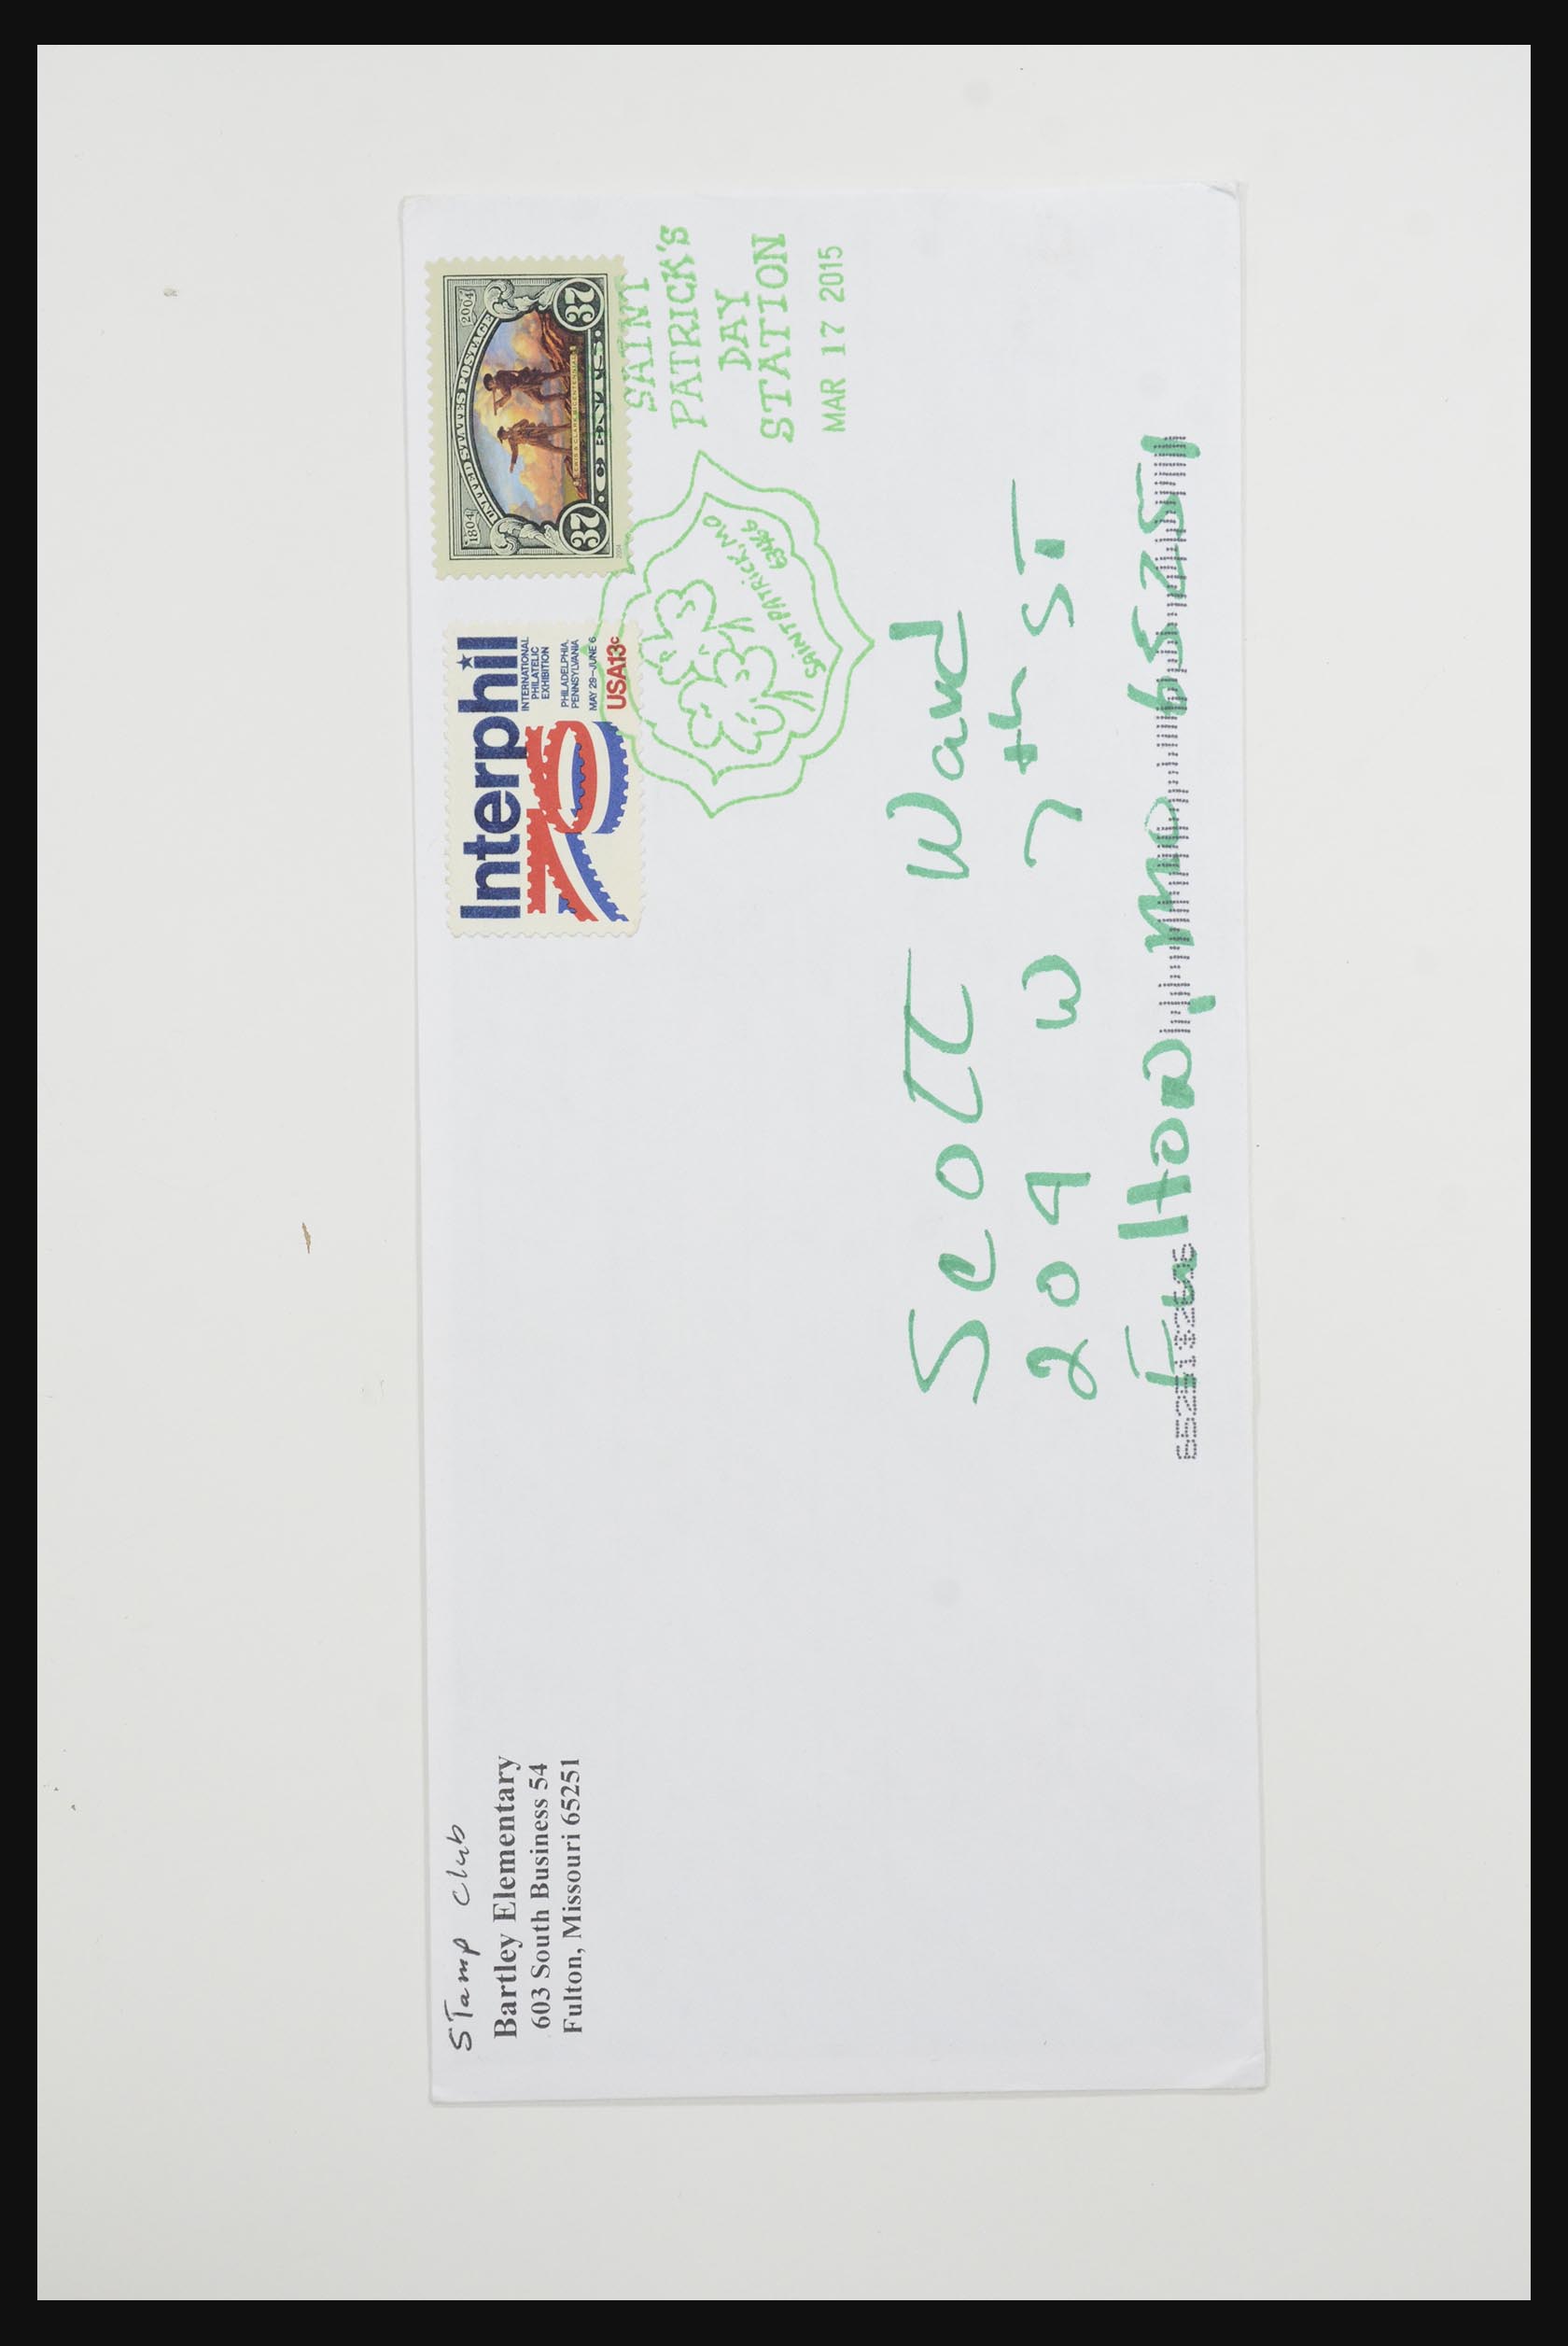 31921 282 - 31921 Diverse motieven op brief 1934-1996.